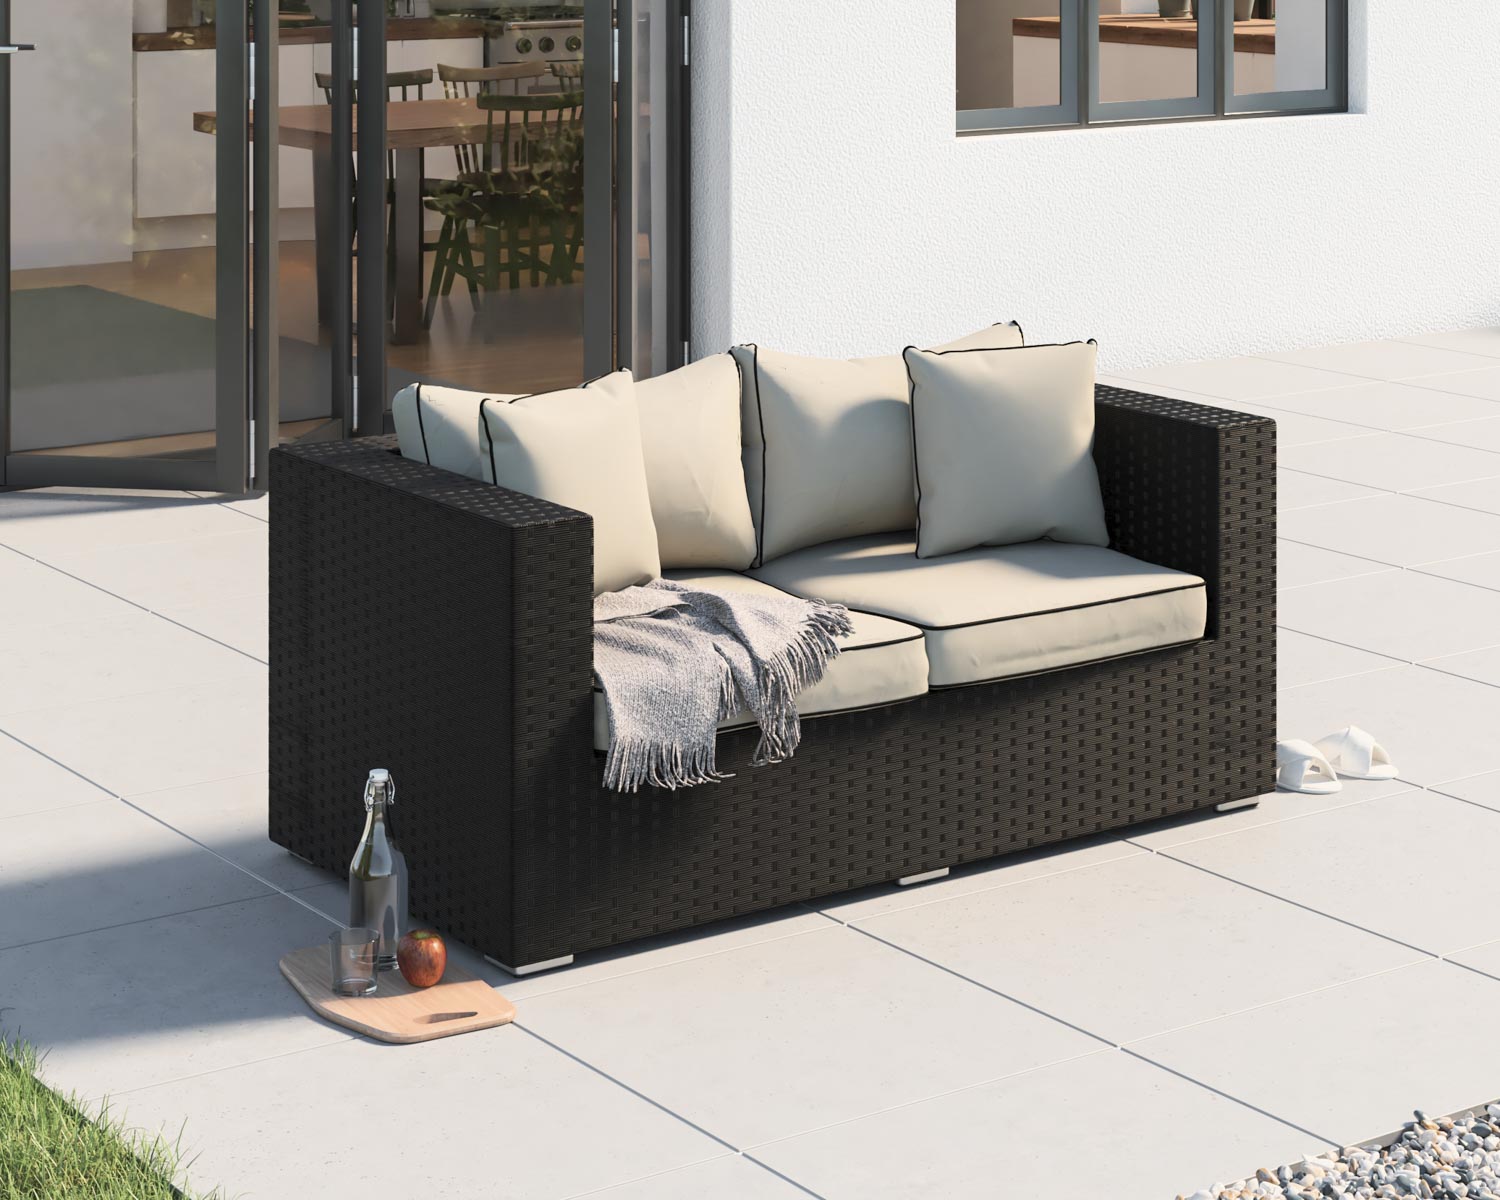 2 Seater Rattan Garden Sofa In Black Amp White Ascot Rattan Direct